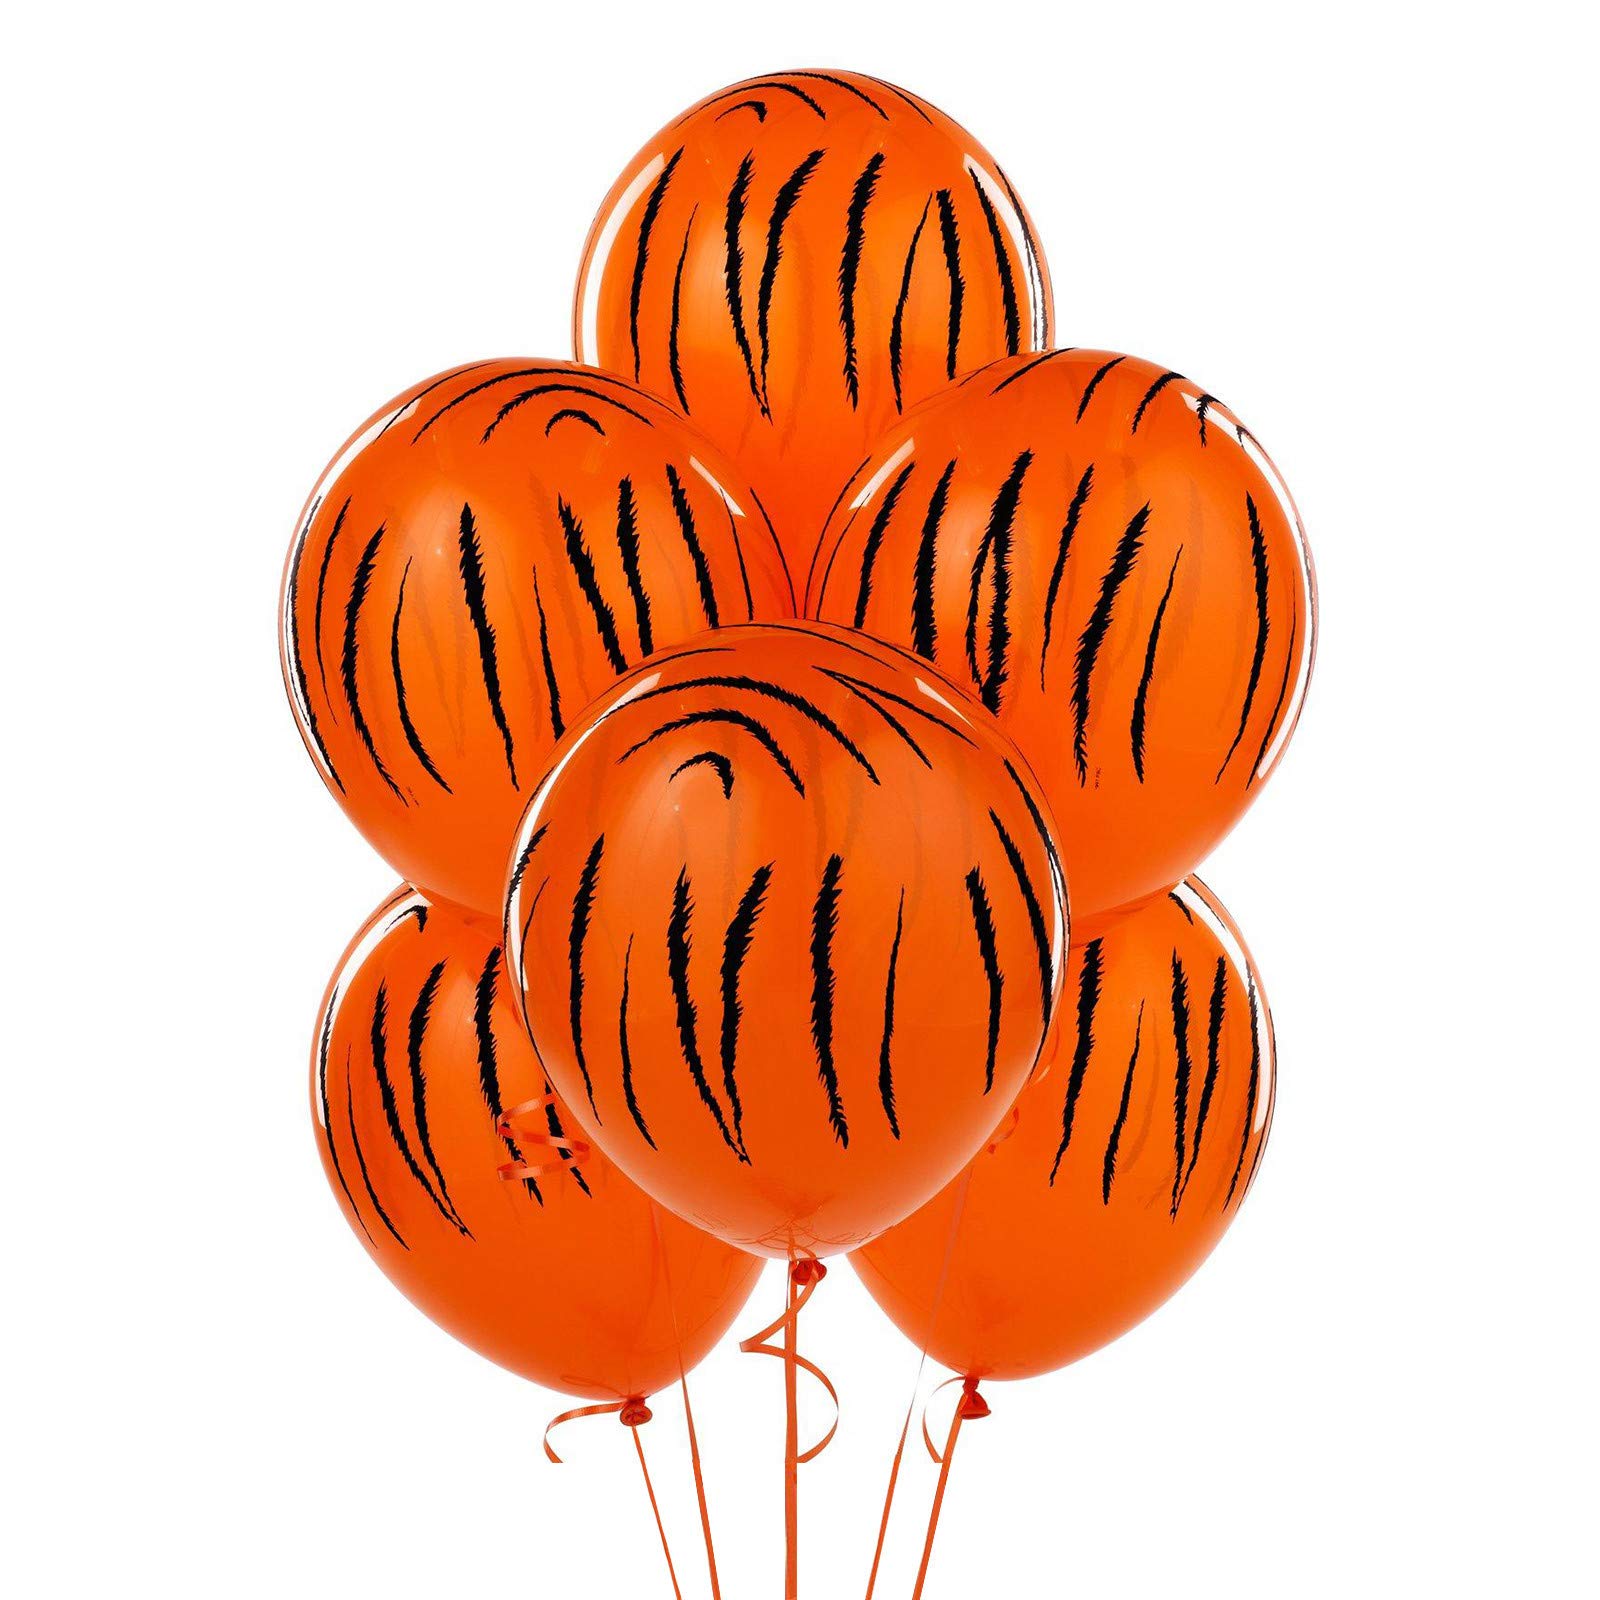 Jungle Tiger Safari Animal Printed Latex Balloons for Jungle / Safari / Wild One Themed Party Decoration